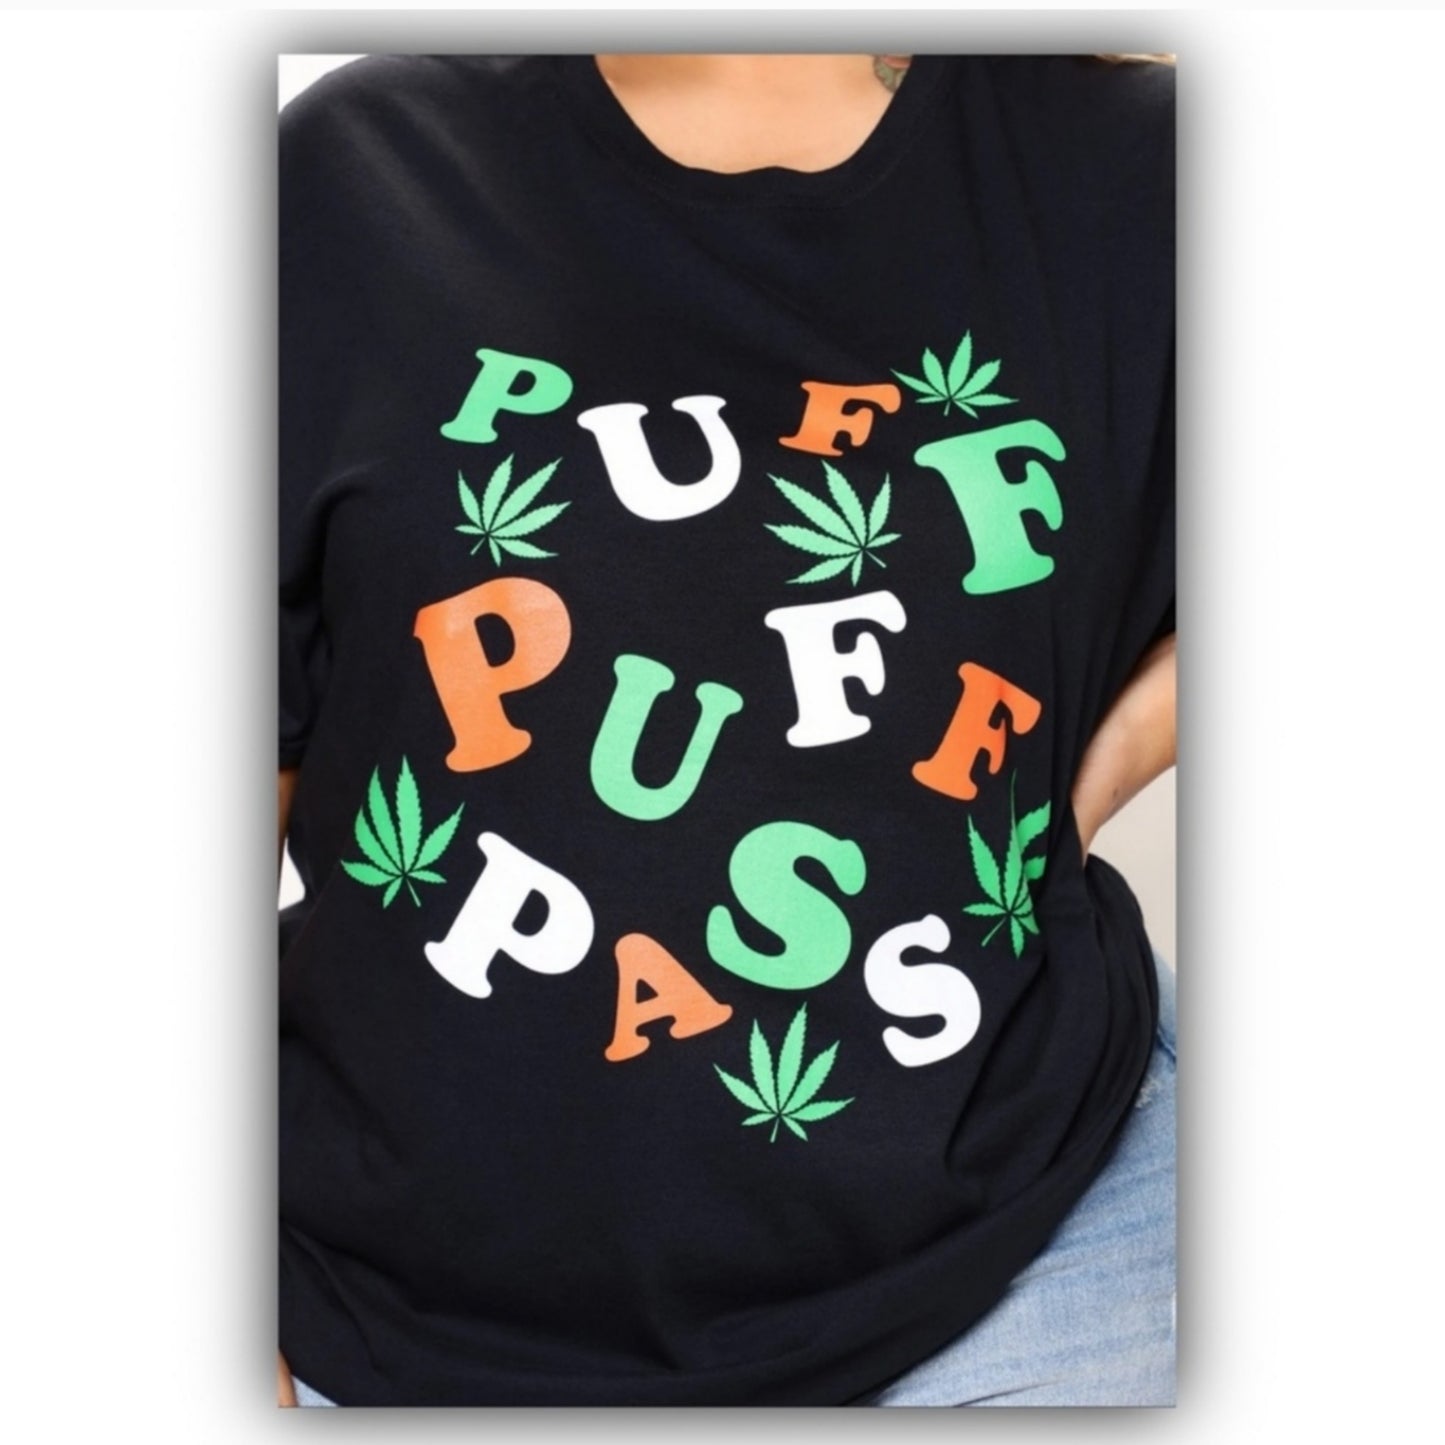 Unisex Graphic Tee | Puff Puff Pass | Print Comfy Cotton Black T-Shirt - Fashion Nova - Shirts